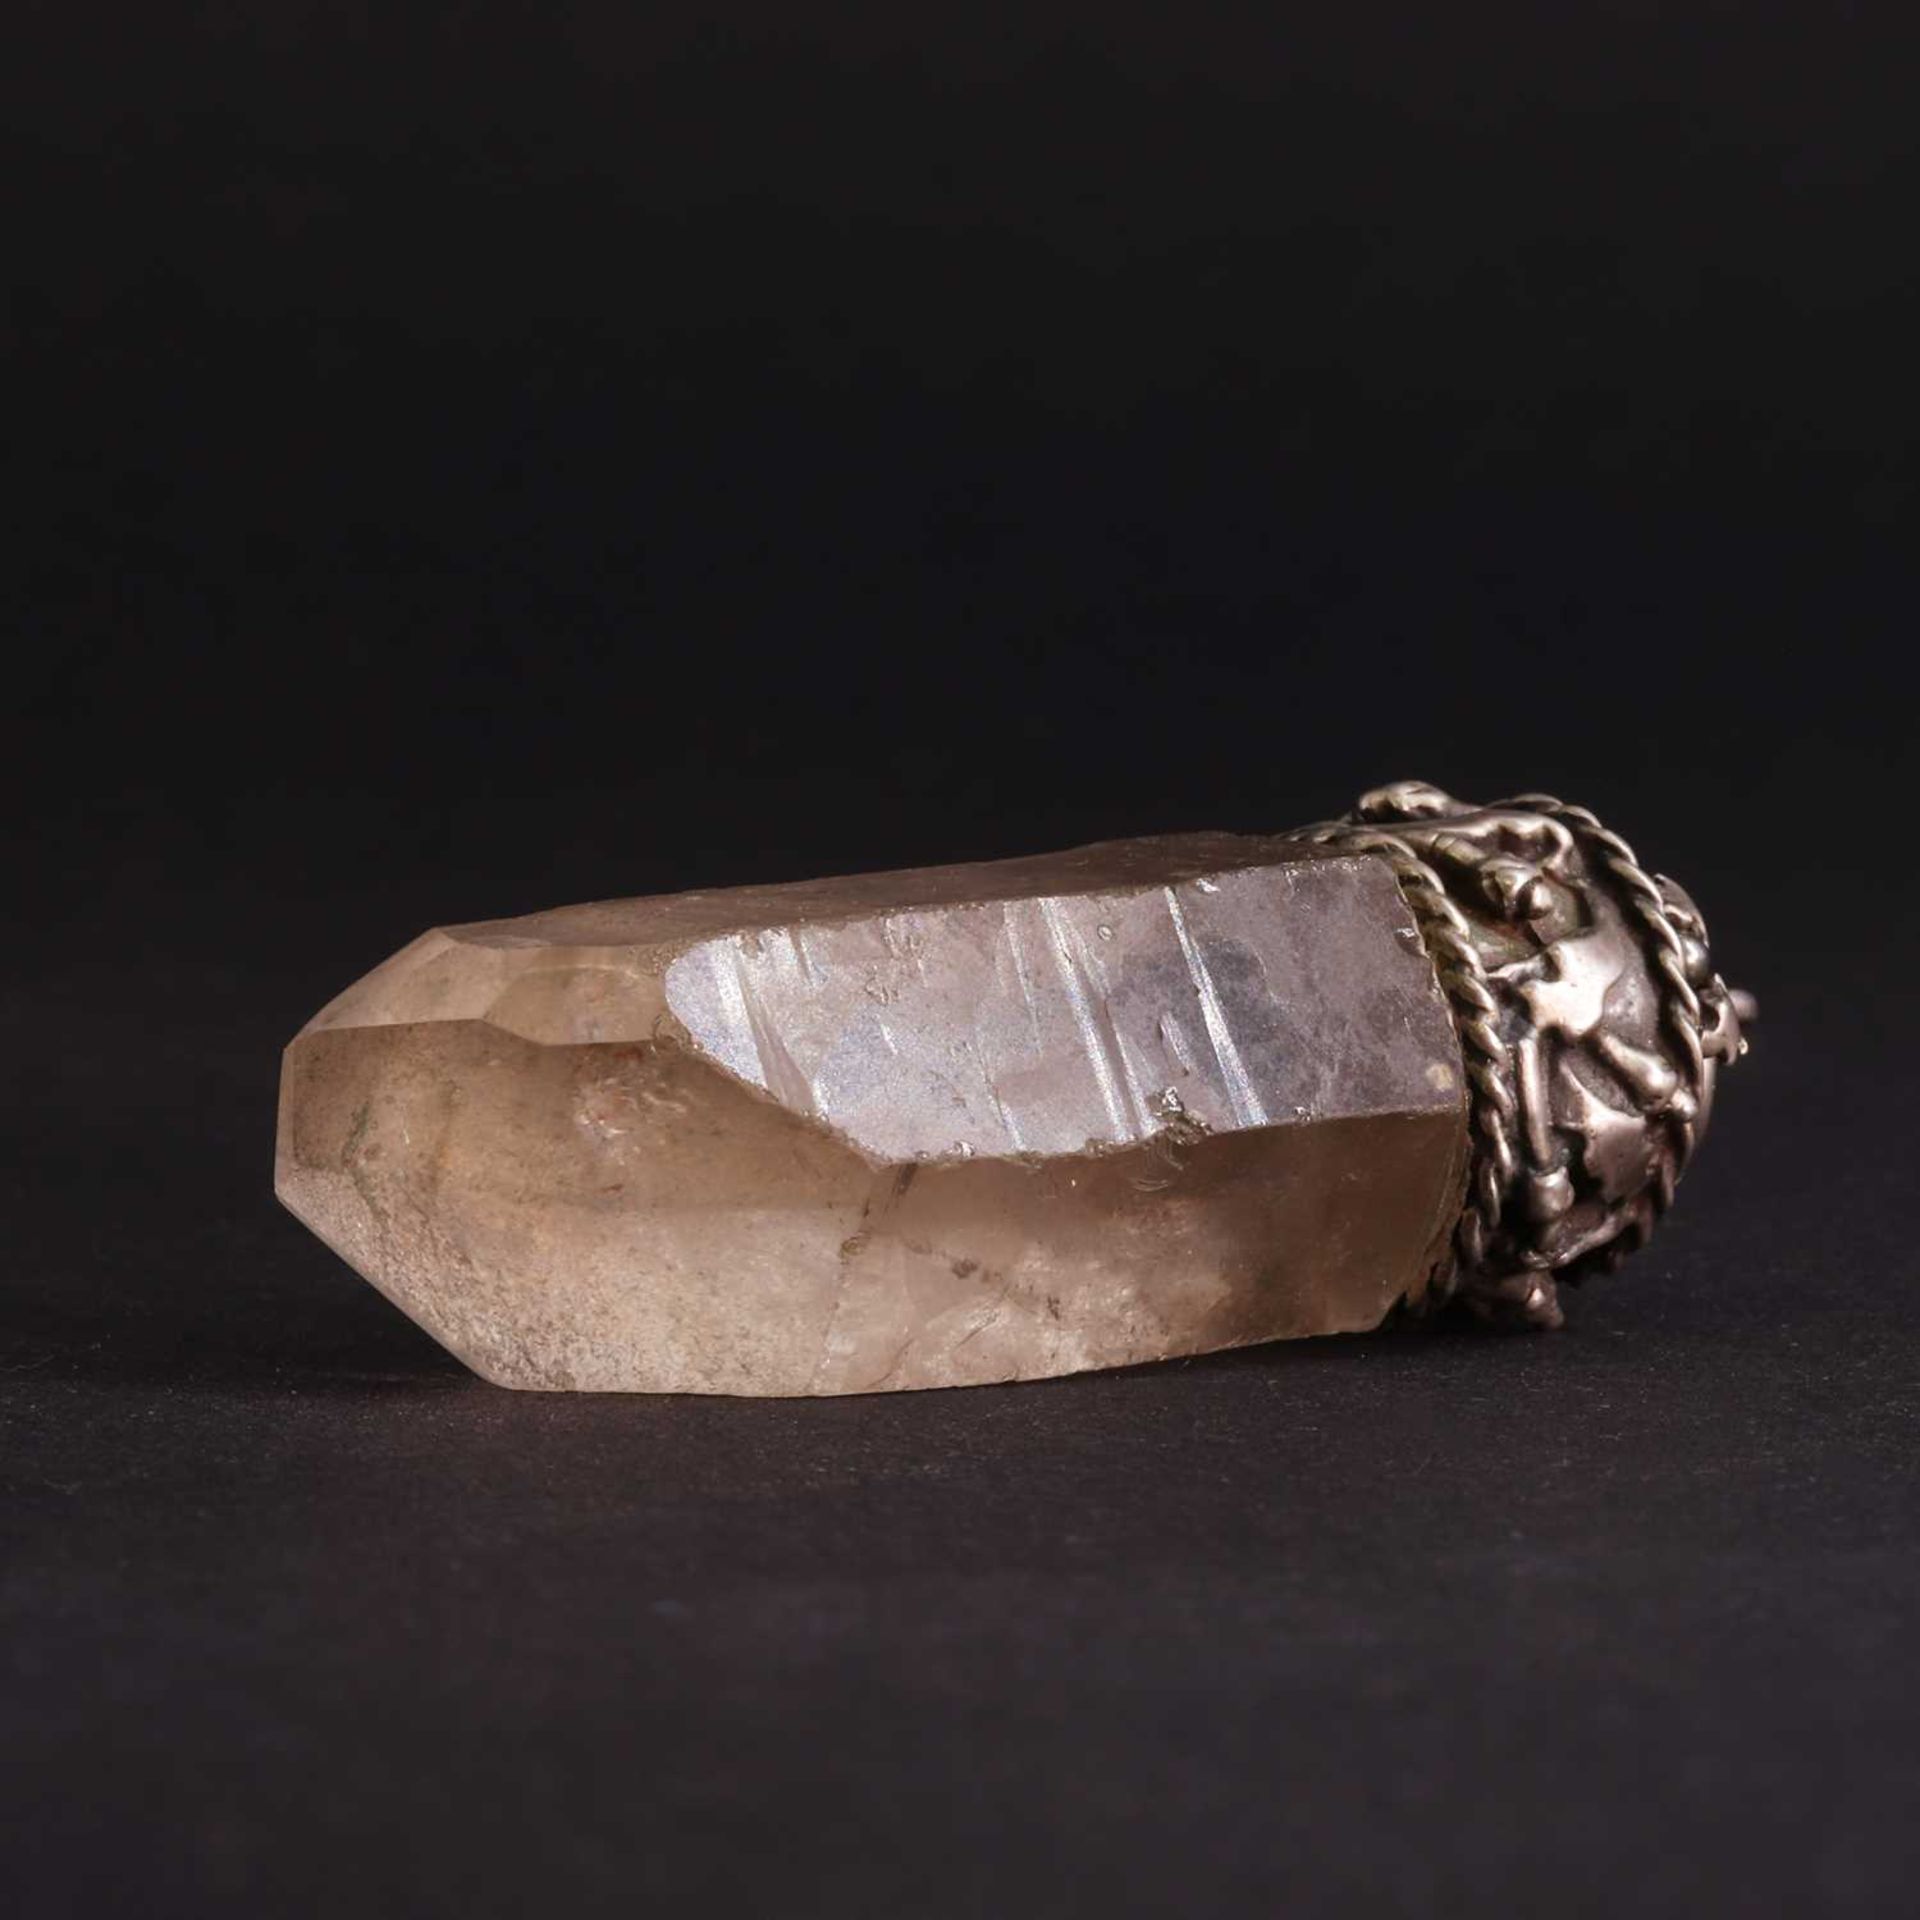 A rock crystal finger or 'charivari',